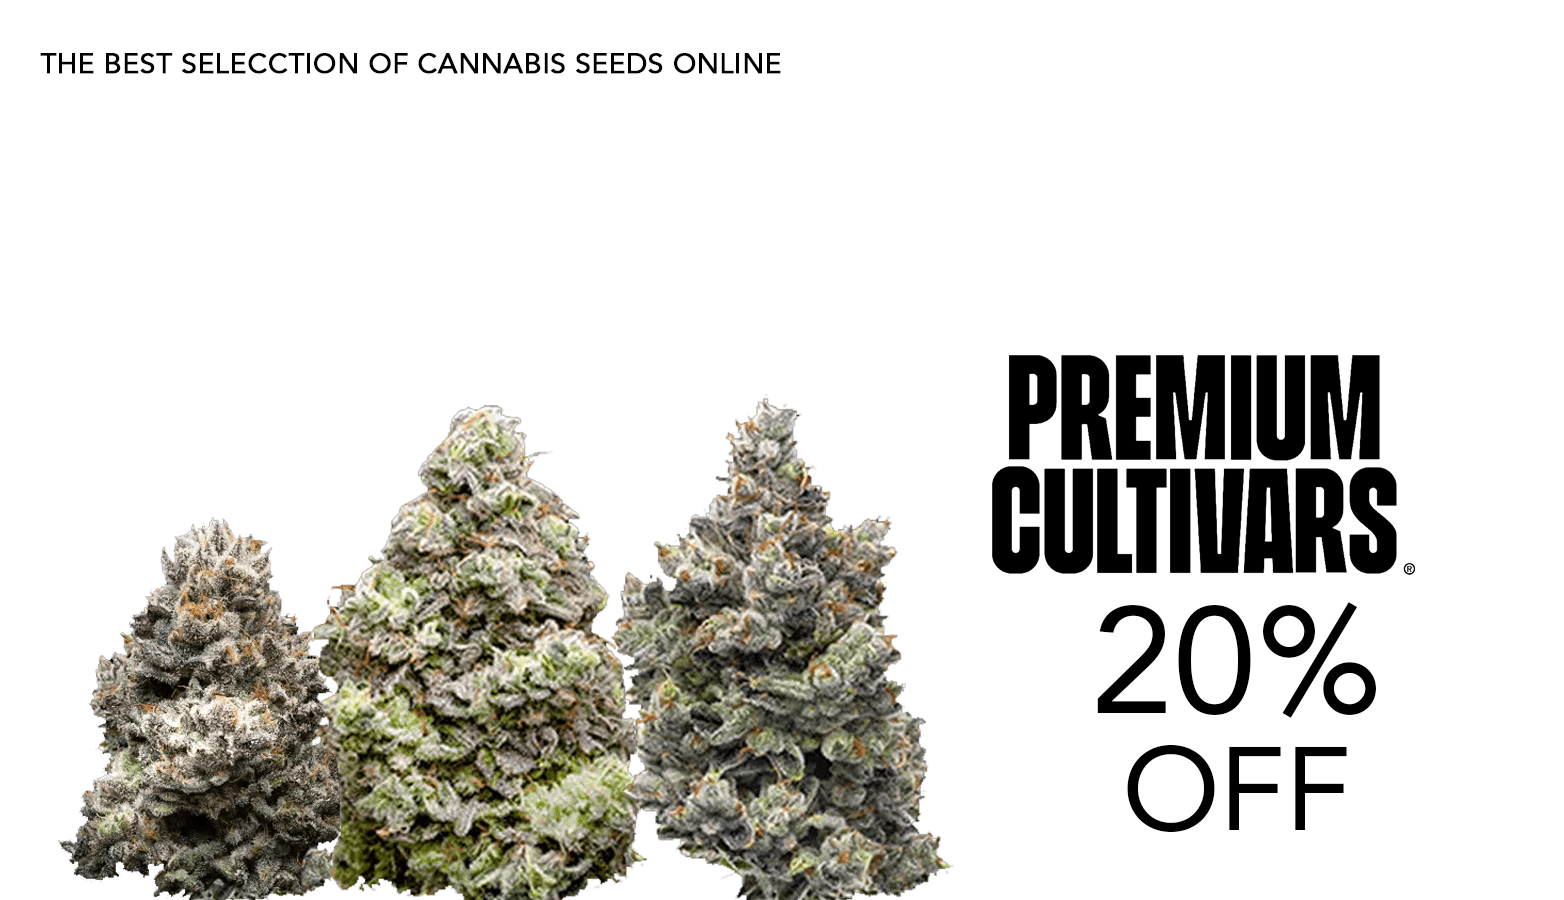 Premium Cultivars Discount for 20% Save On Cannabis